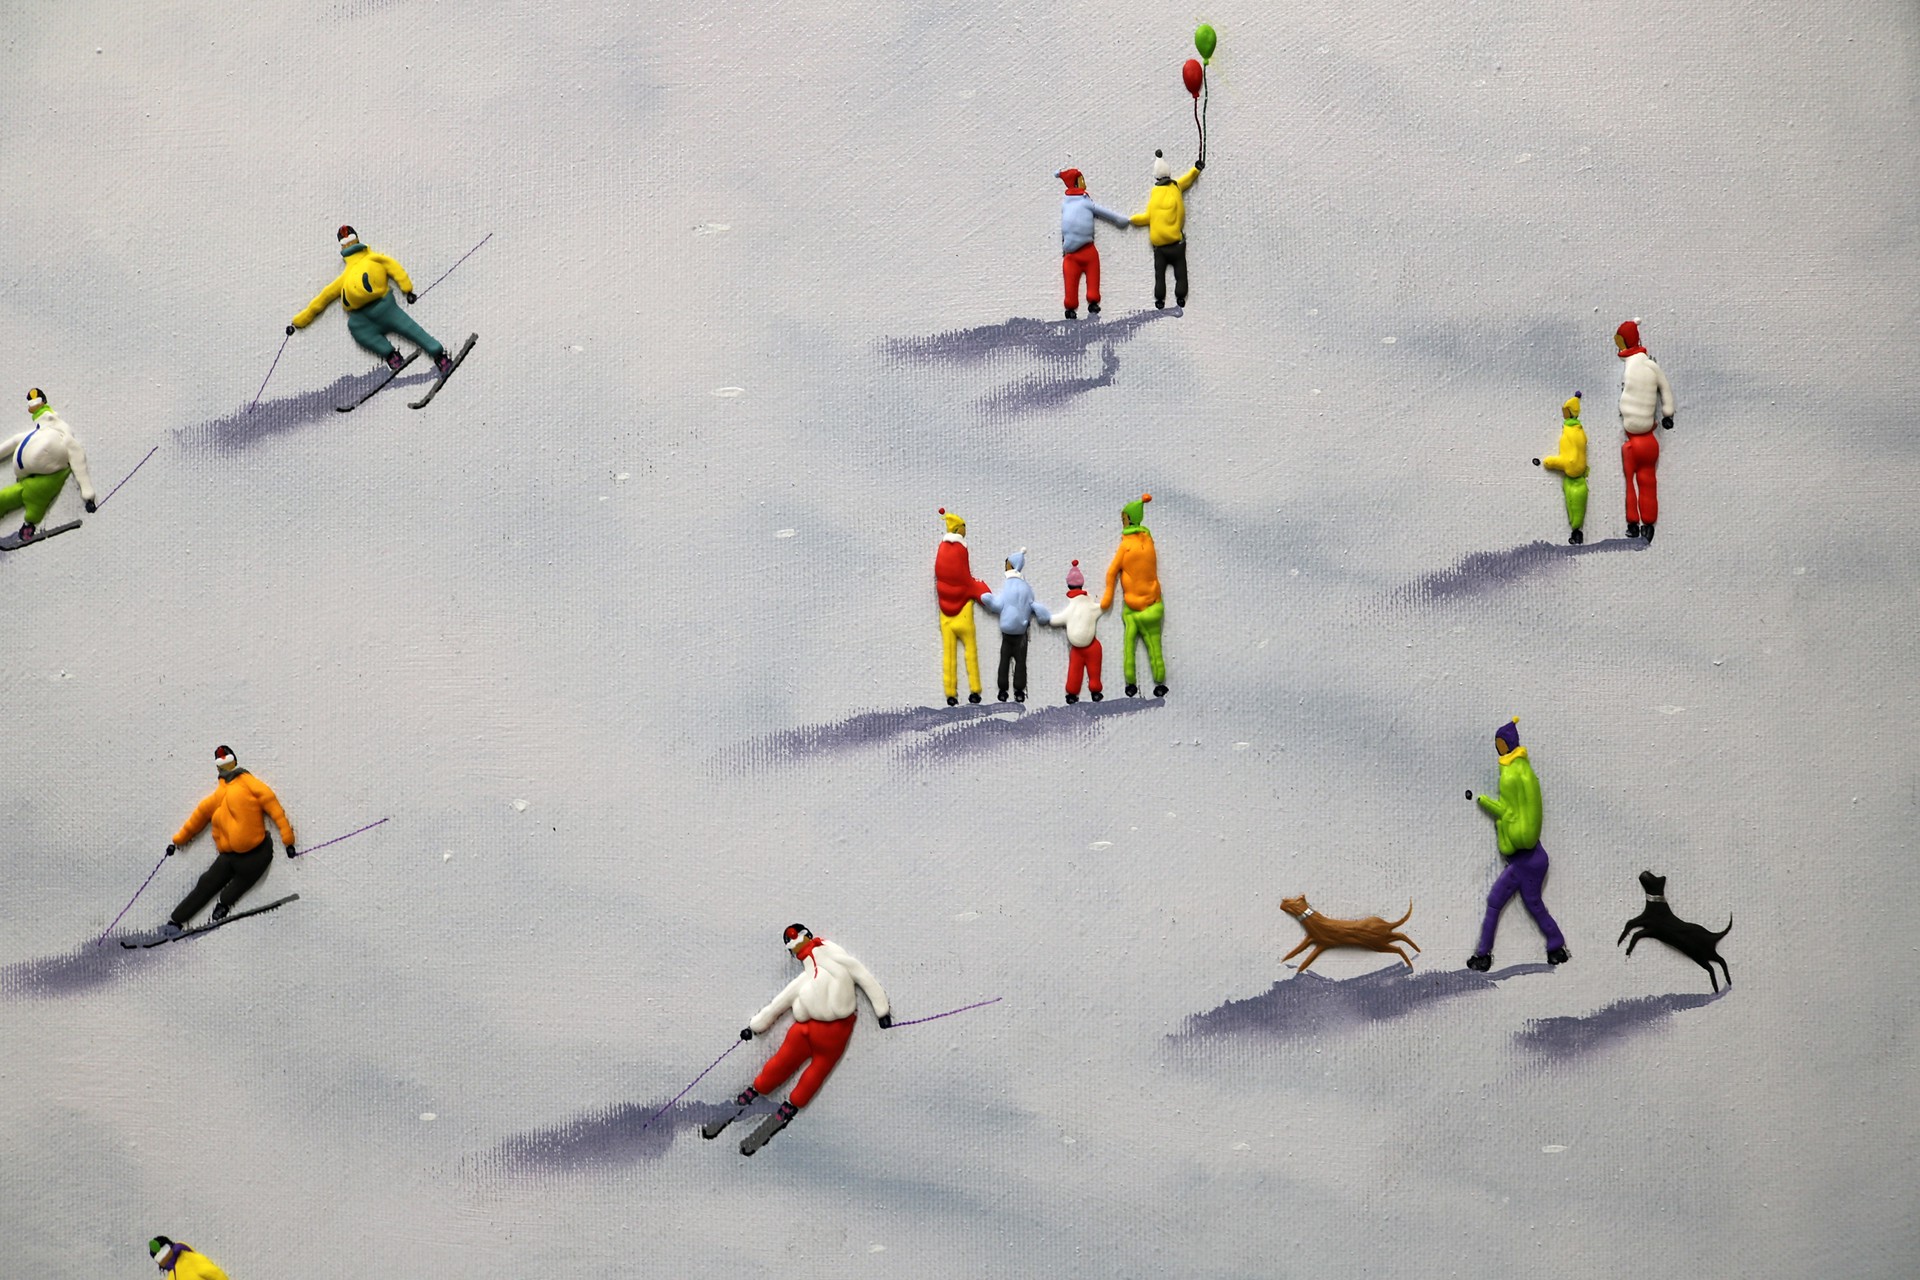 Untitled Ski by Antonio Garcia Soler